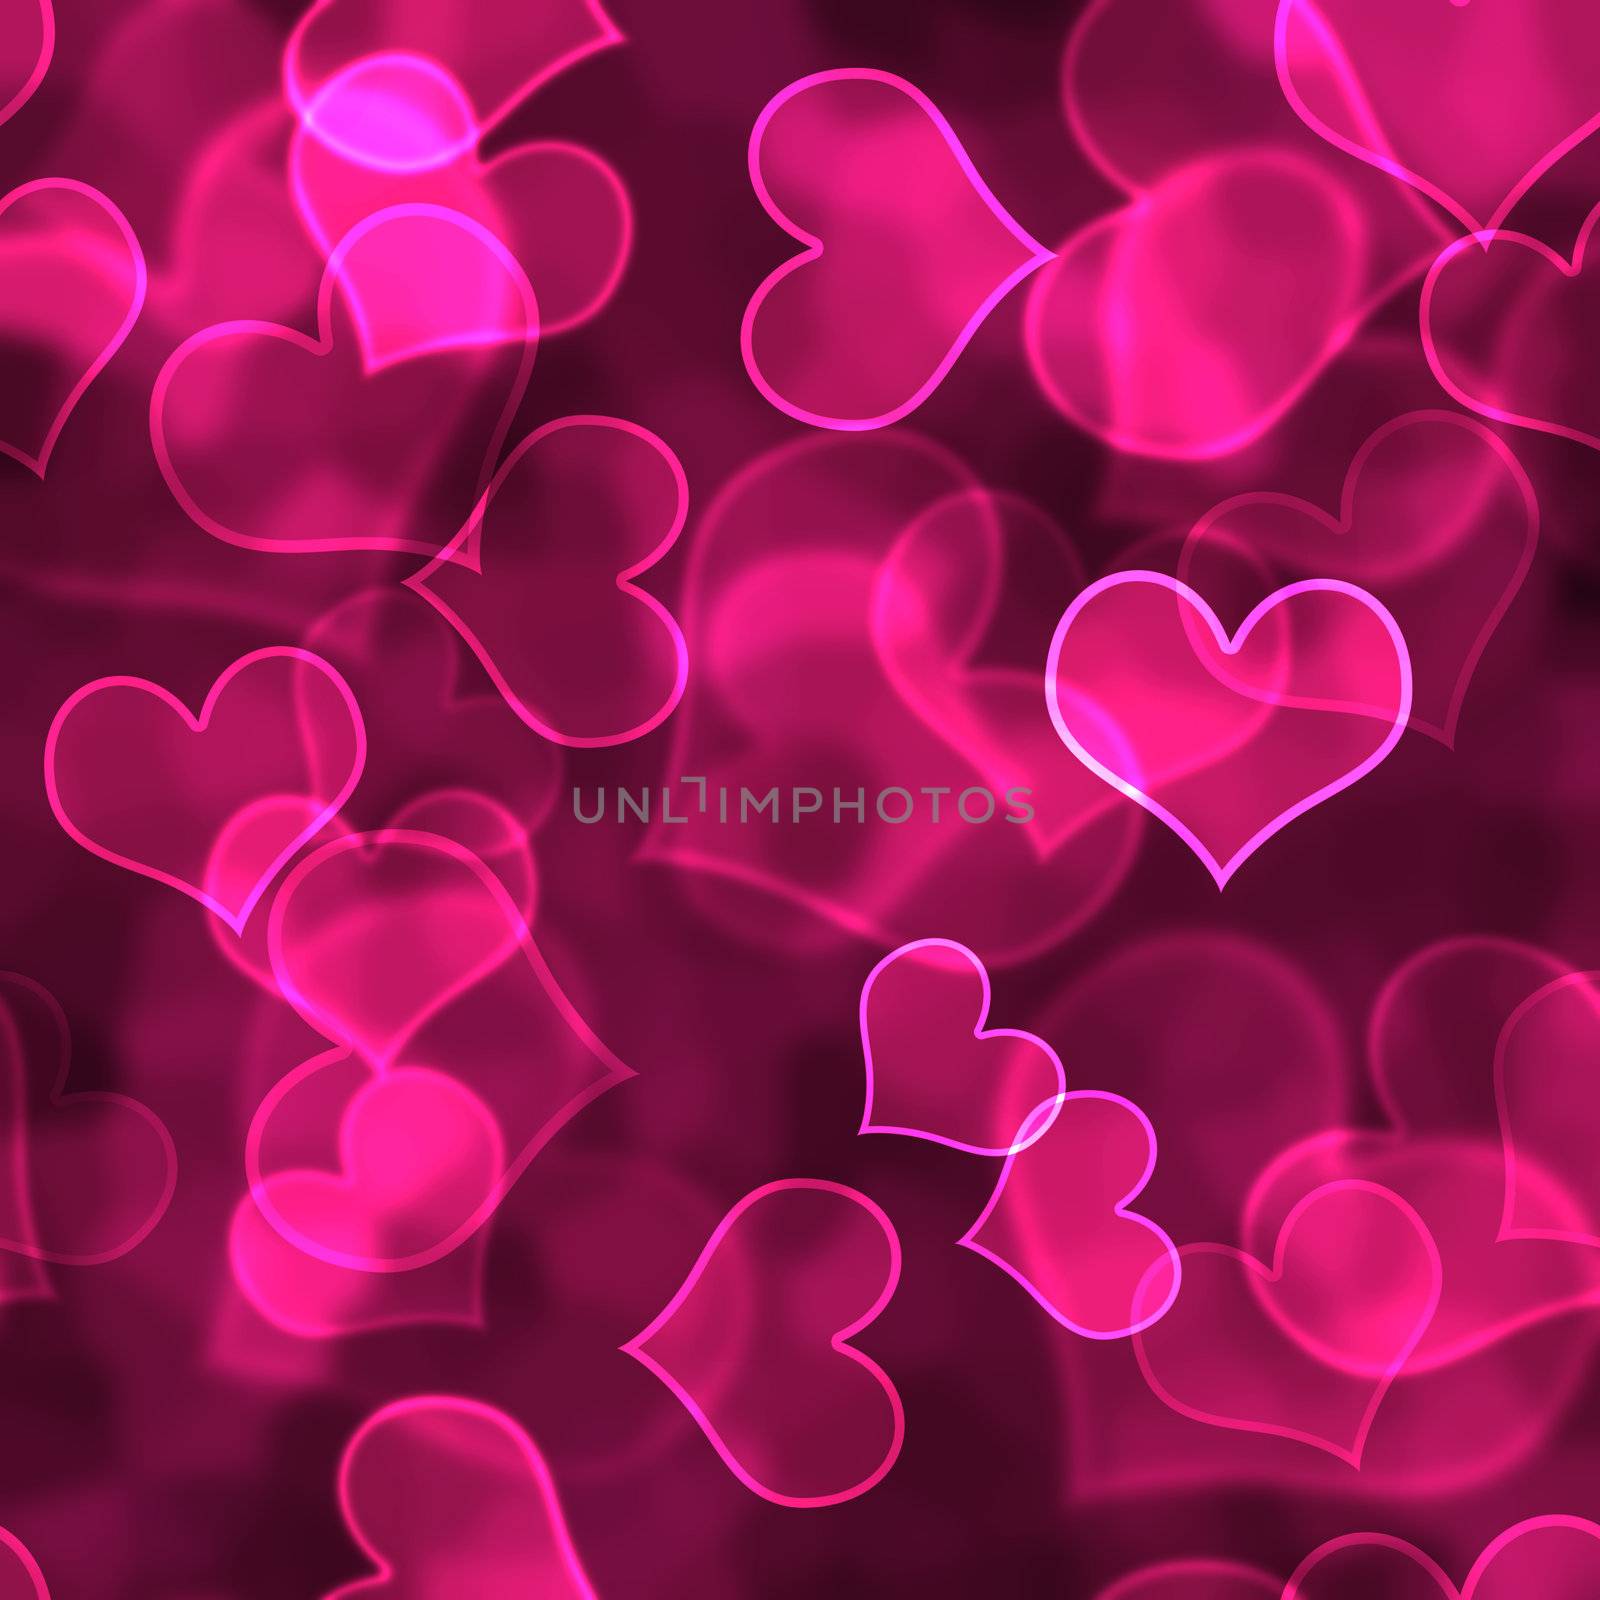 Bright pink hearts in various focus bokeh design on dark background